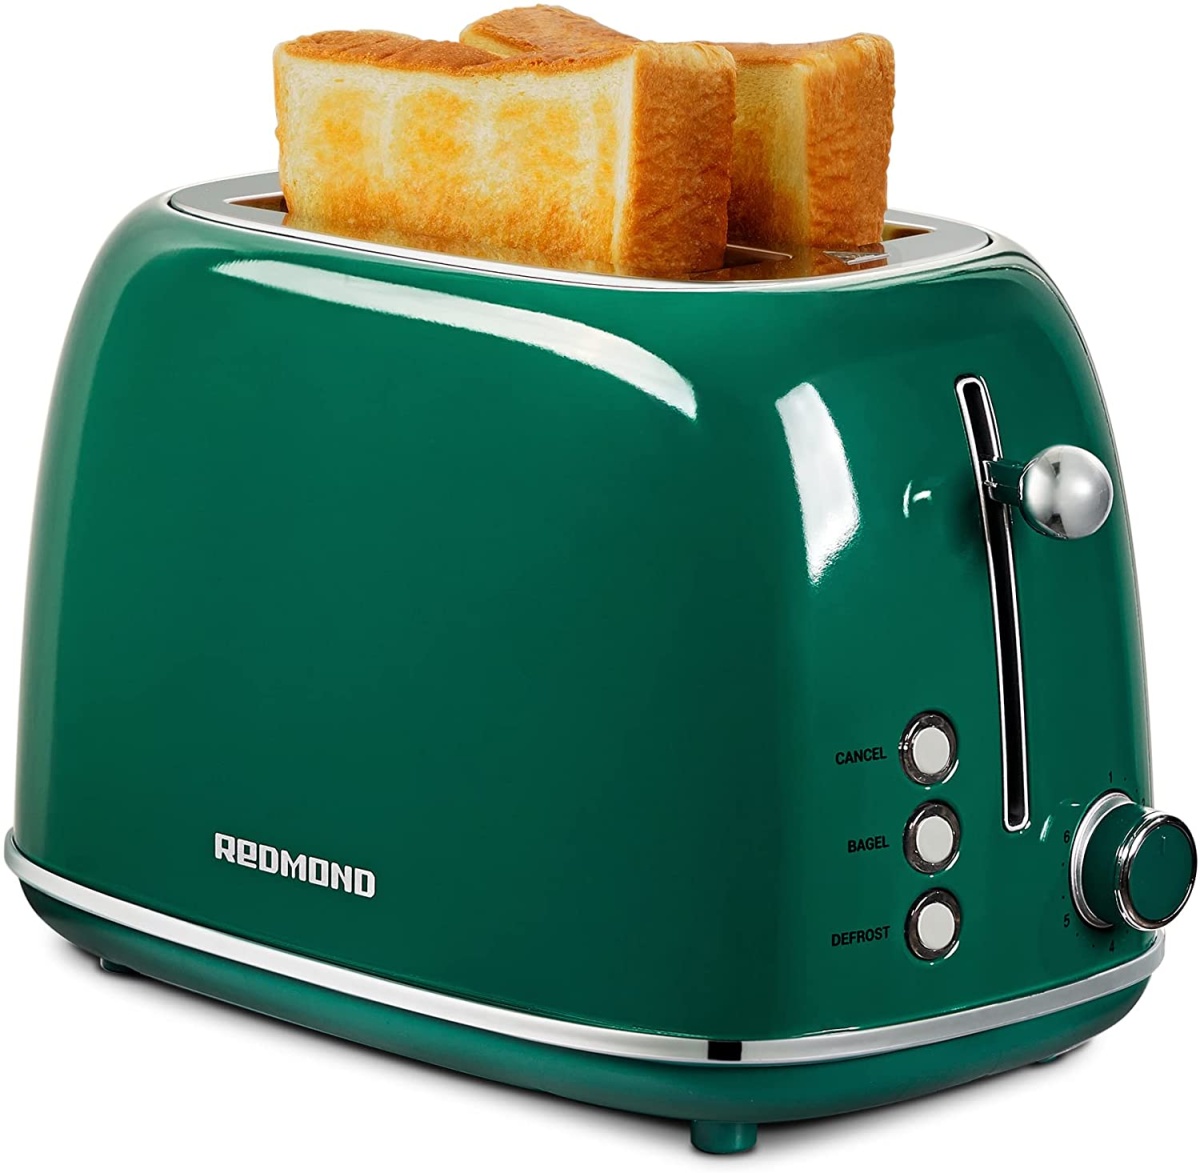 redmond 2 slice retro toaster review